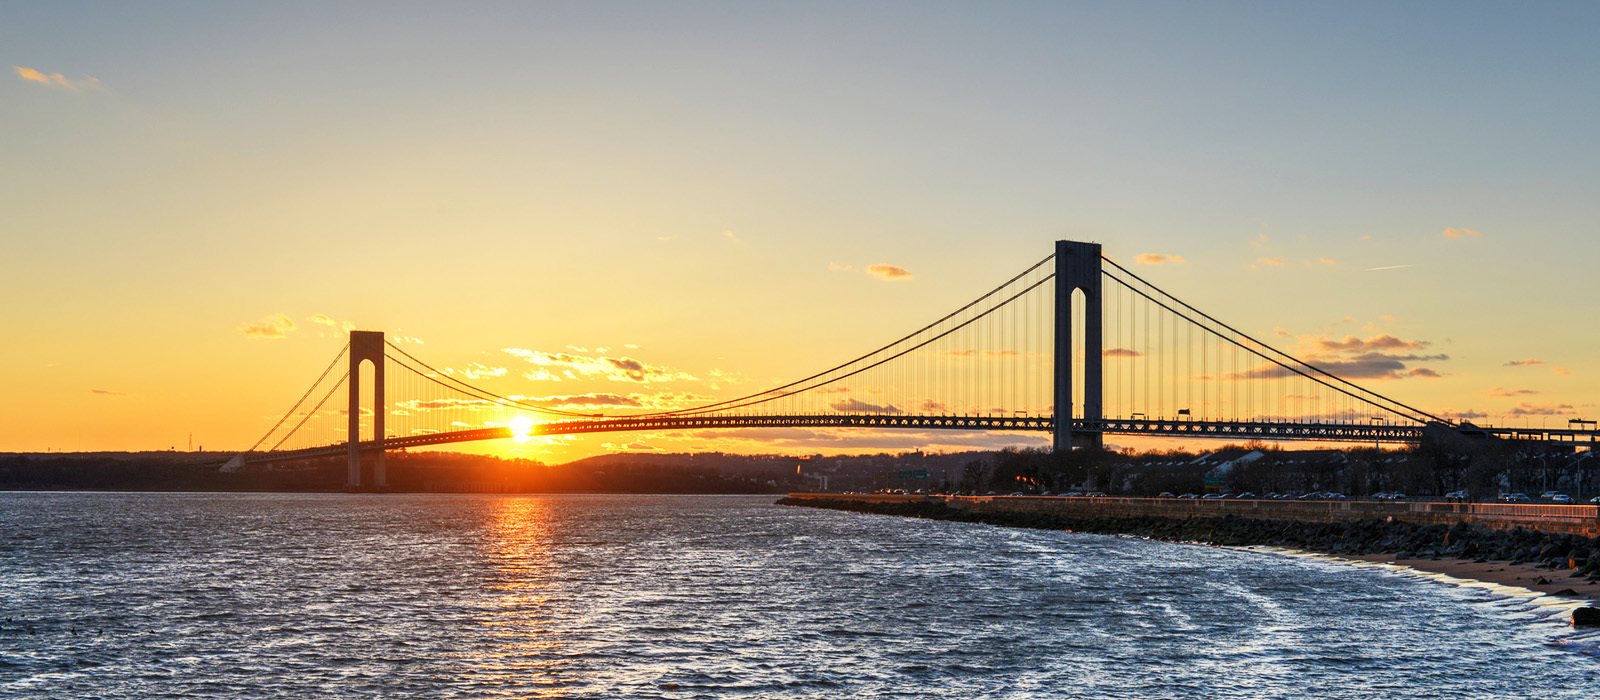 Verrazzano Bridge overlooking Staten Island, NY